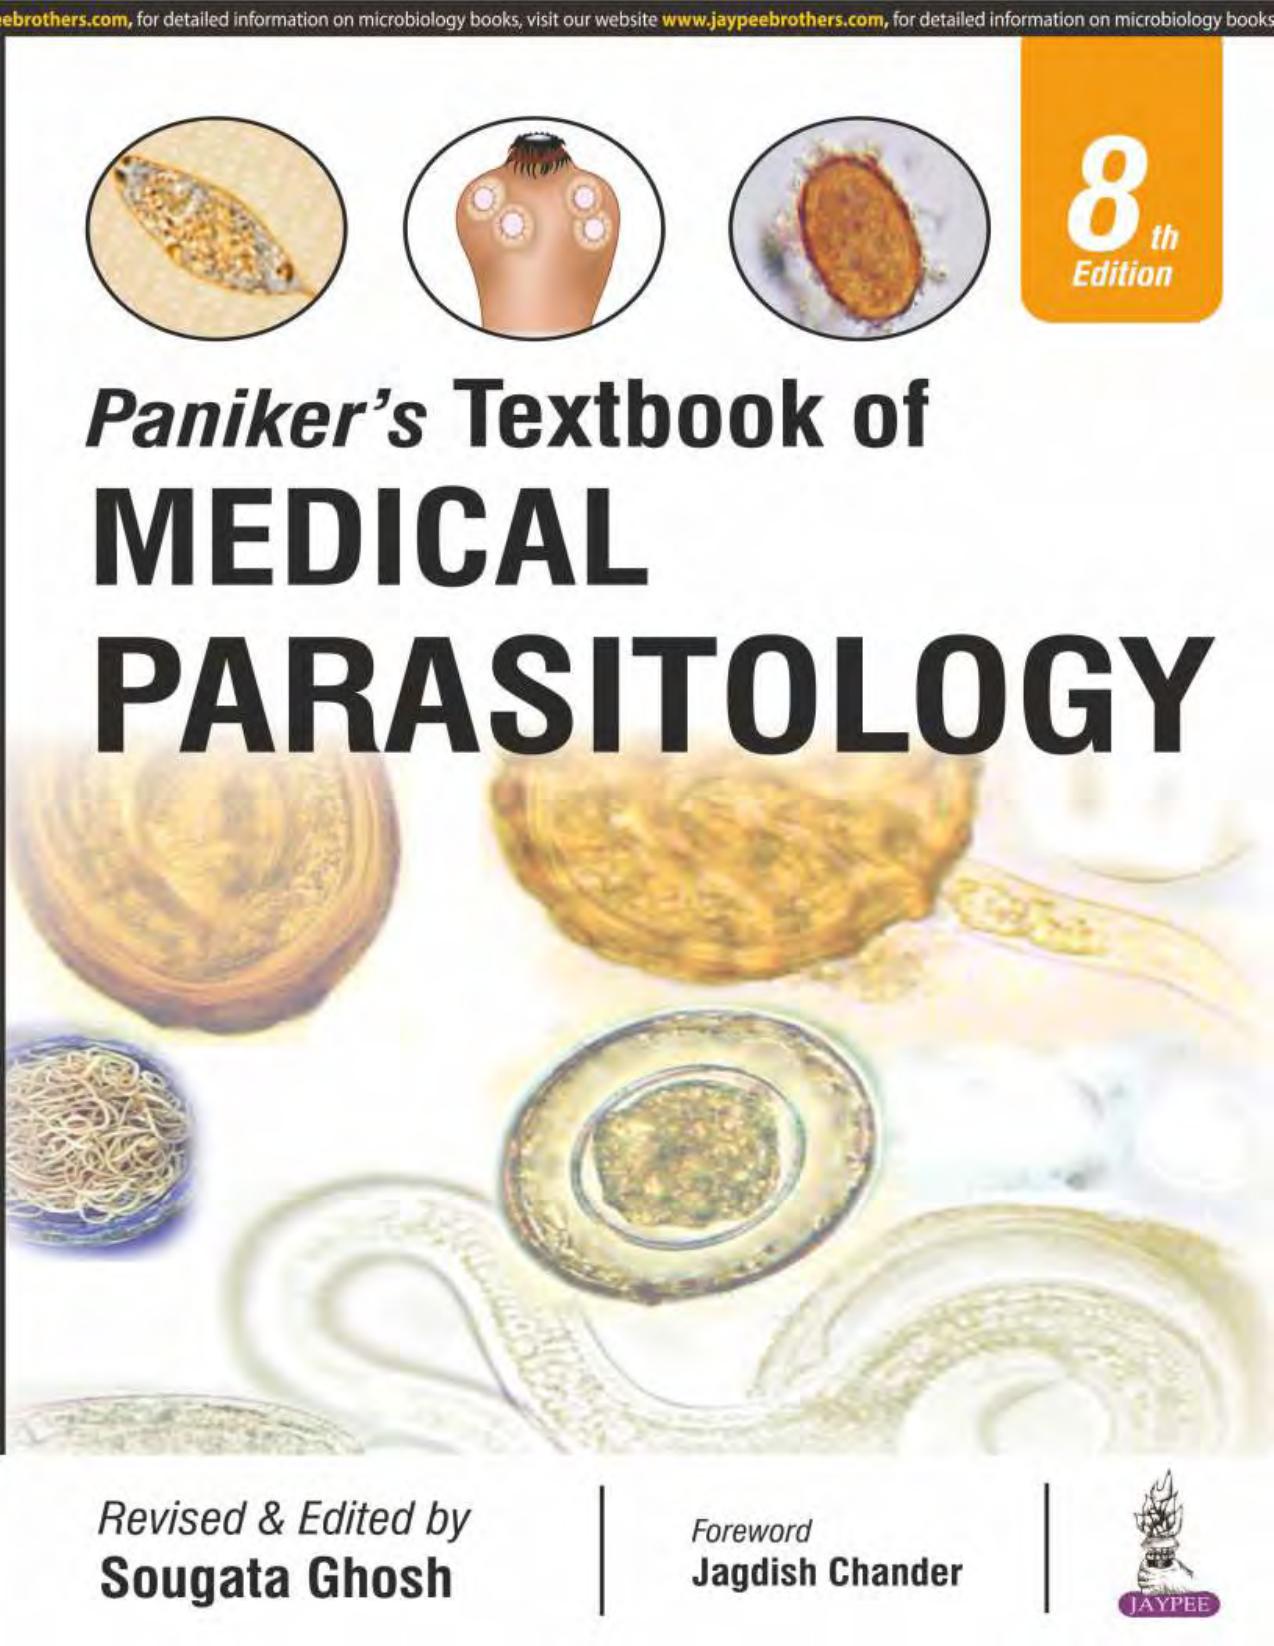 Panikers Textbook of MEDICAL PARASITOLOGY 2018